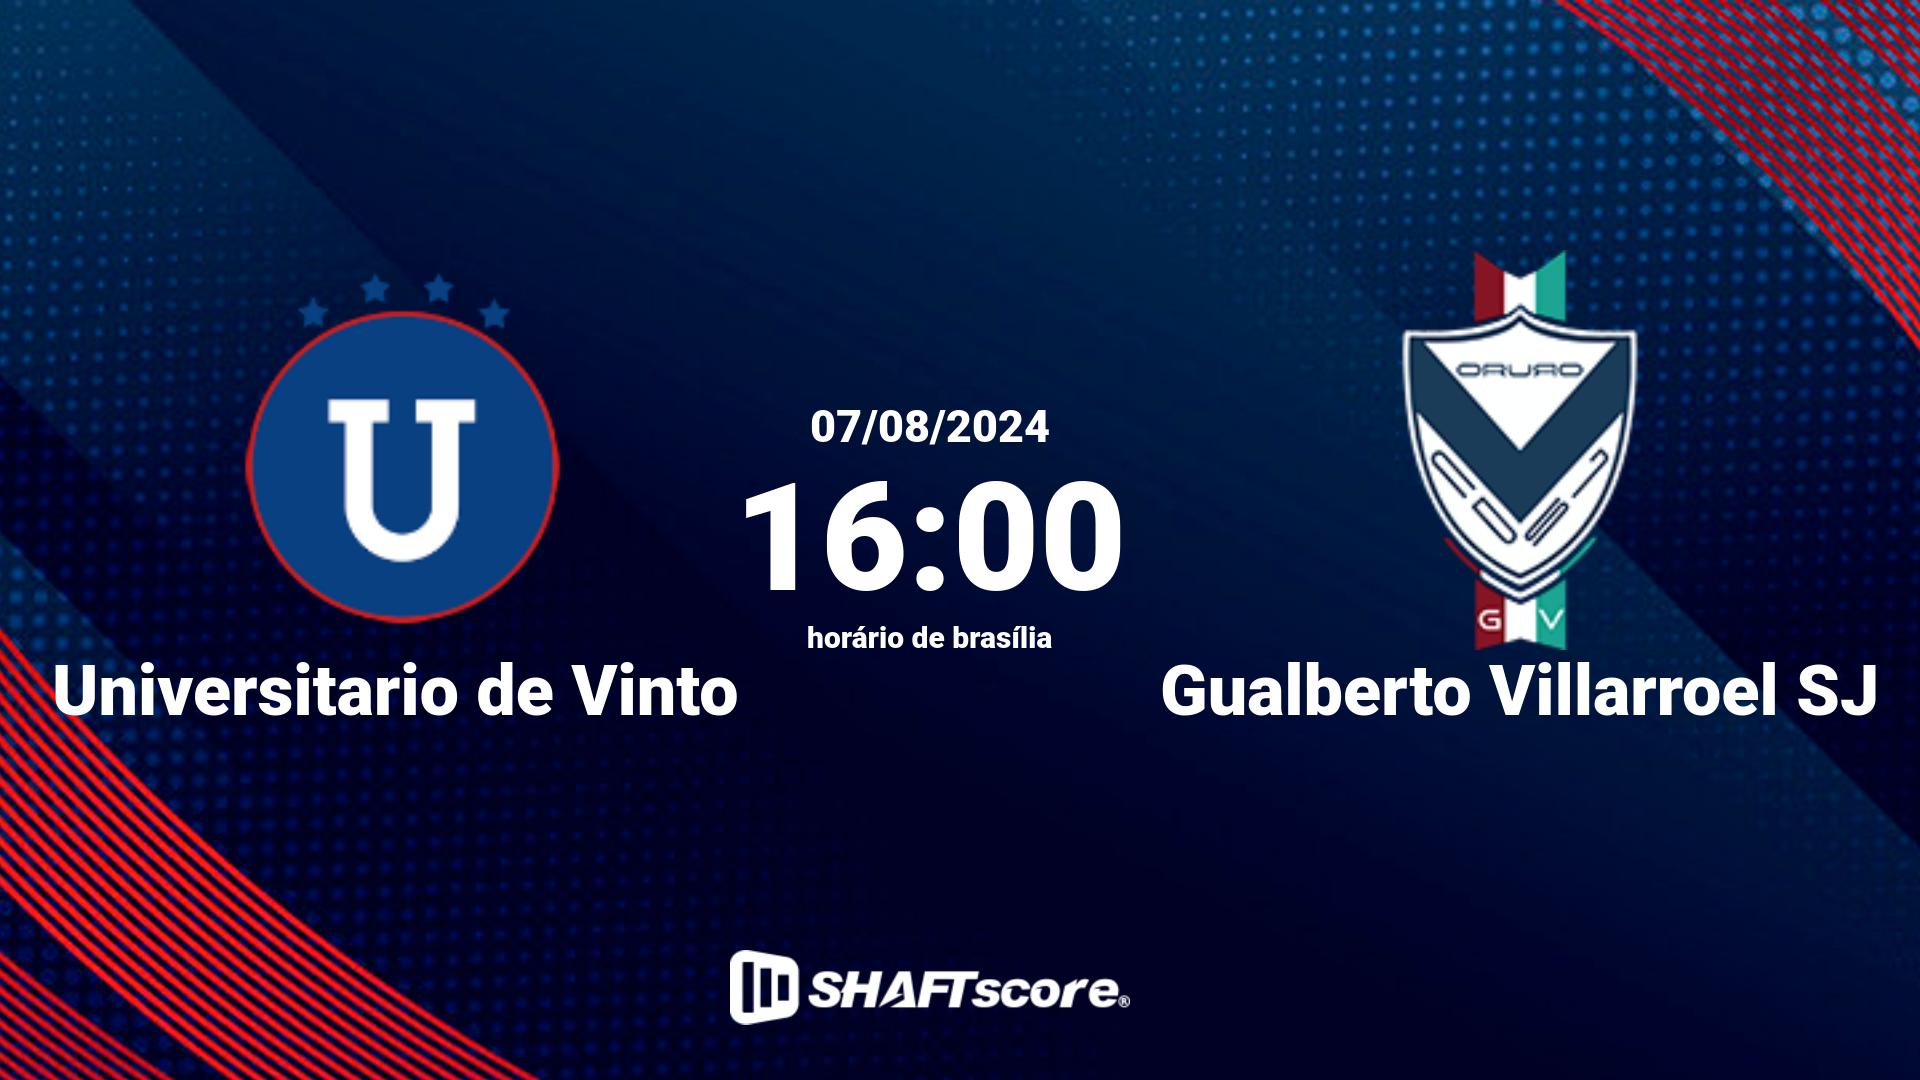 Estatísticas do jogo Universitario de Vinto vs Gualberto Villarroel SJ 07.08 16:00